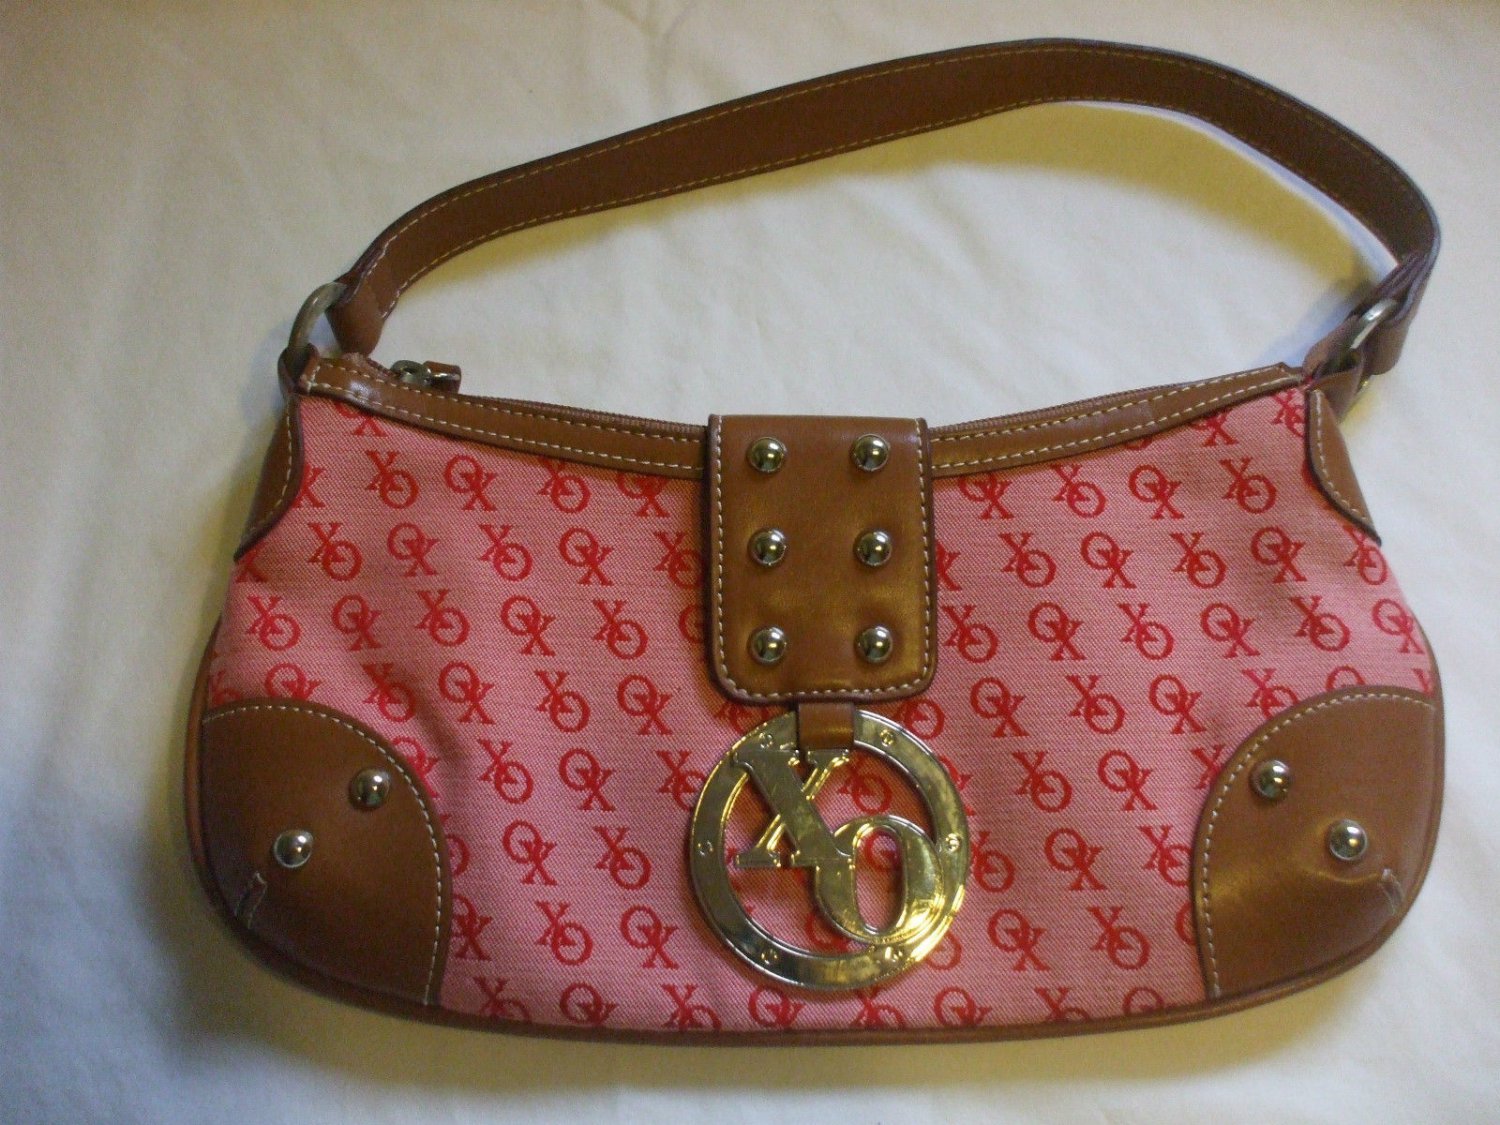 XOXO Red Nylon Purse Handbag With Brown Leather Strap